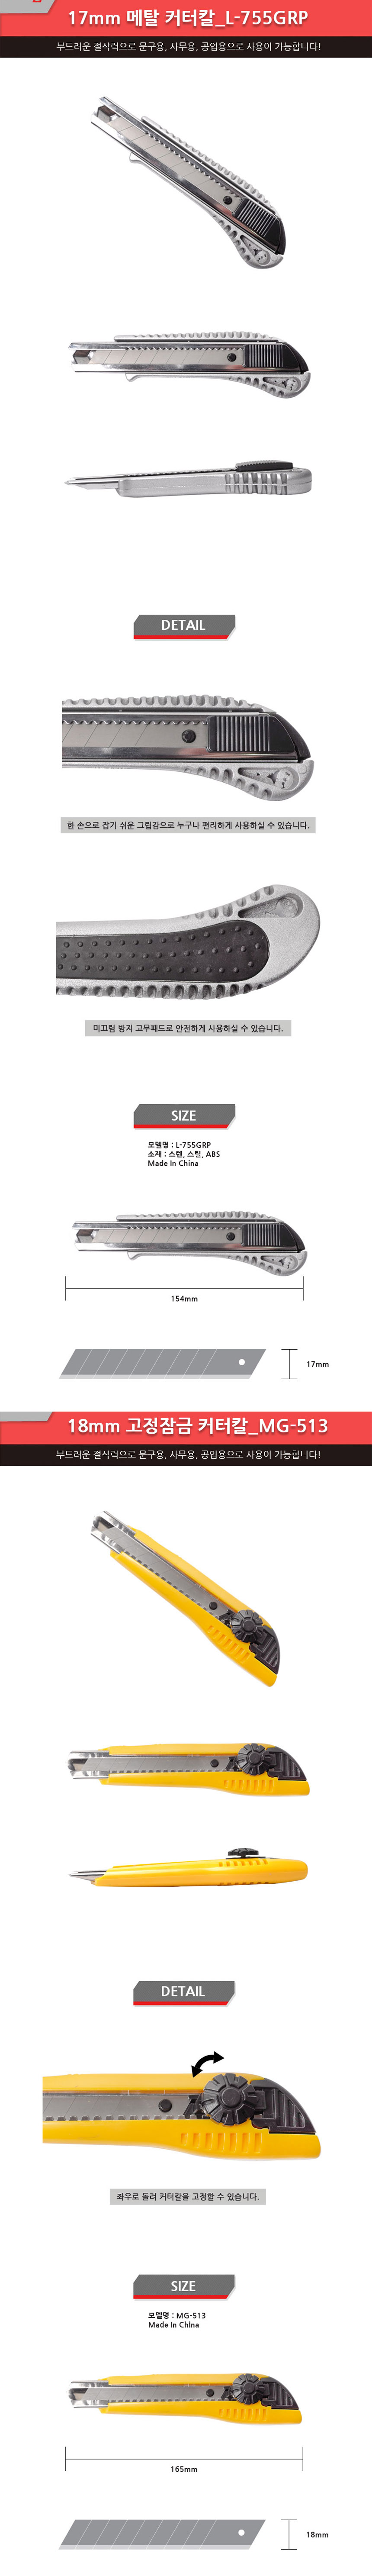 MG513MG755.jpg